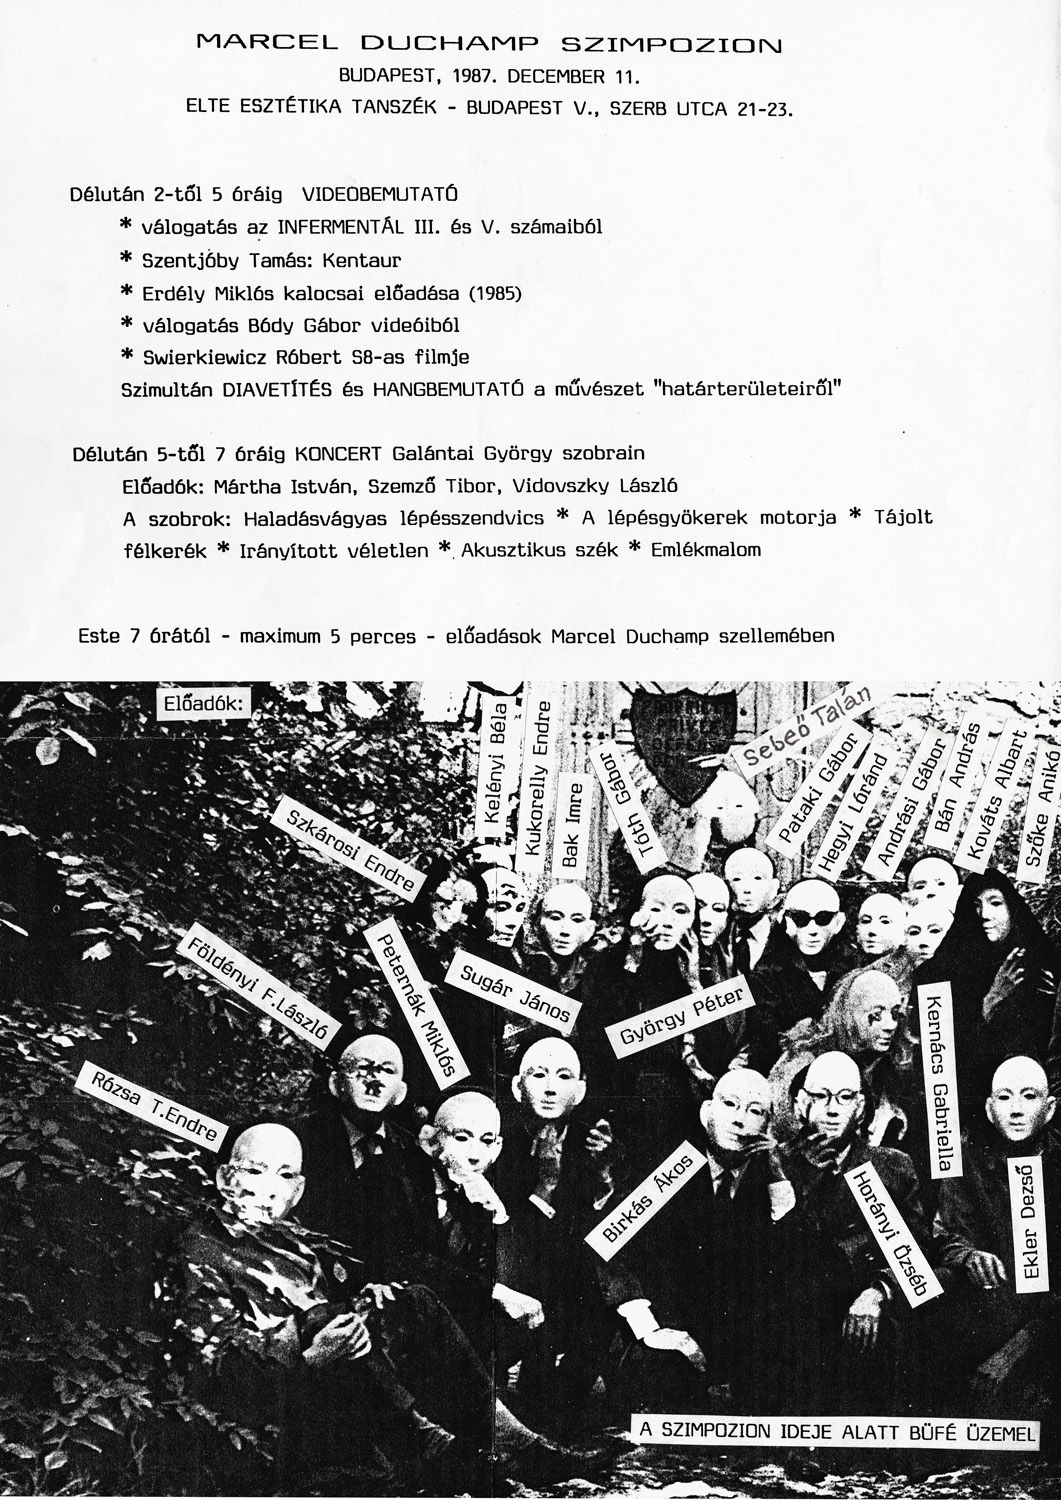 Invitation  for  the Marcel Duchamp Symposion, Department of Aesthetics, ELTE, Budapest, 1987